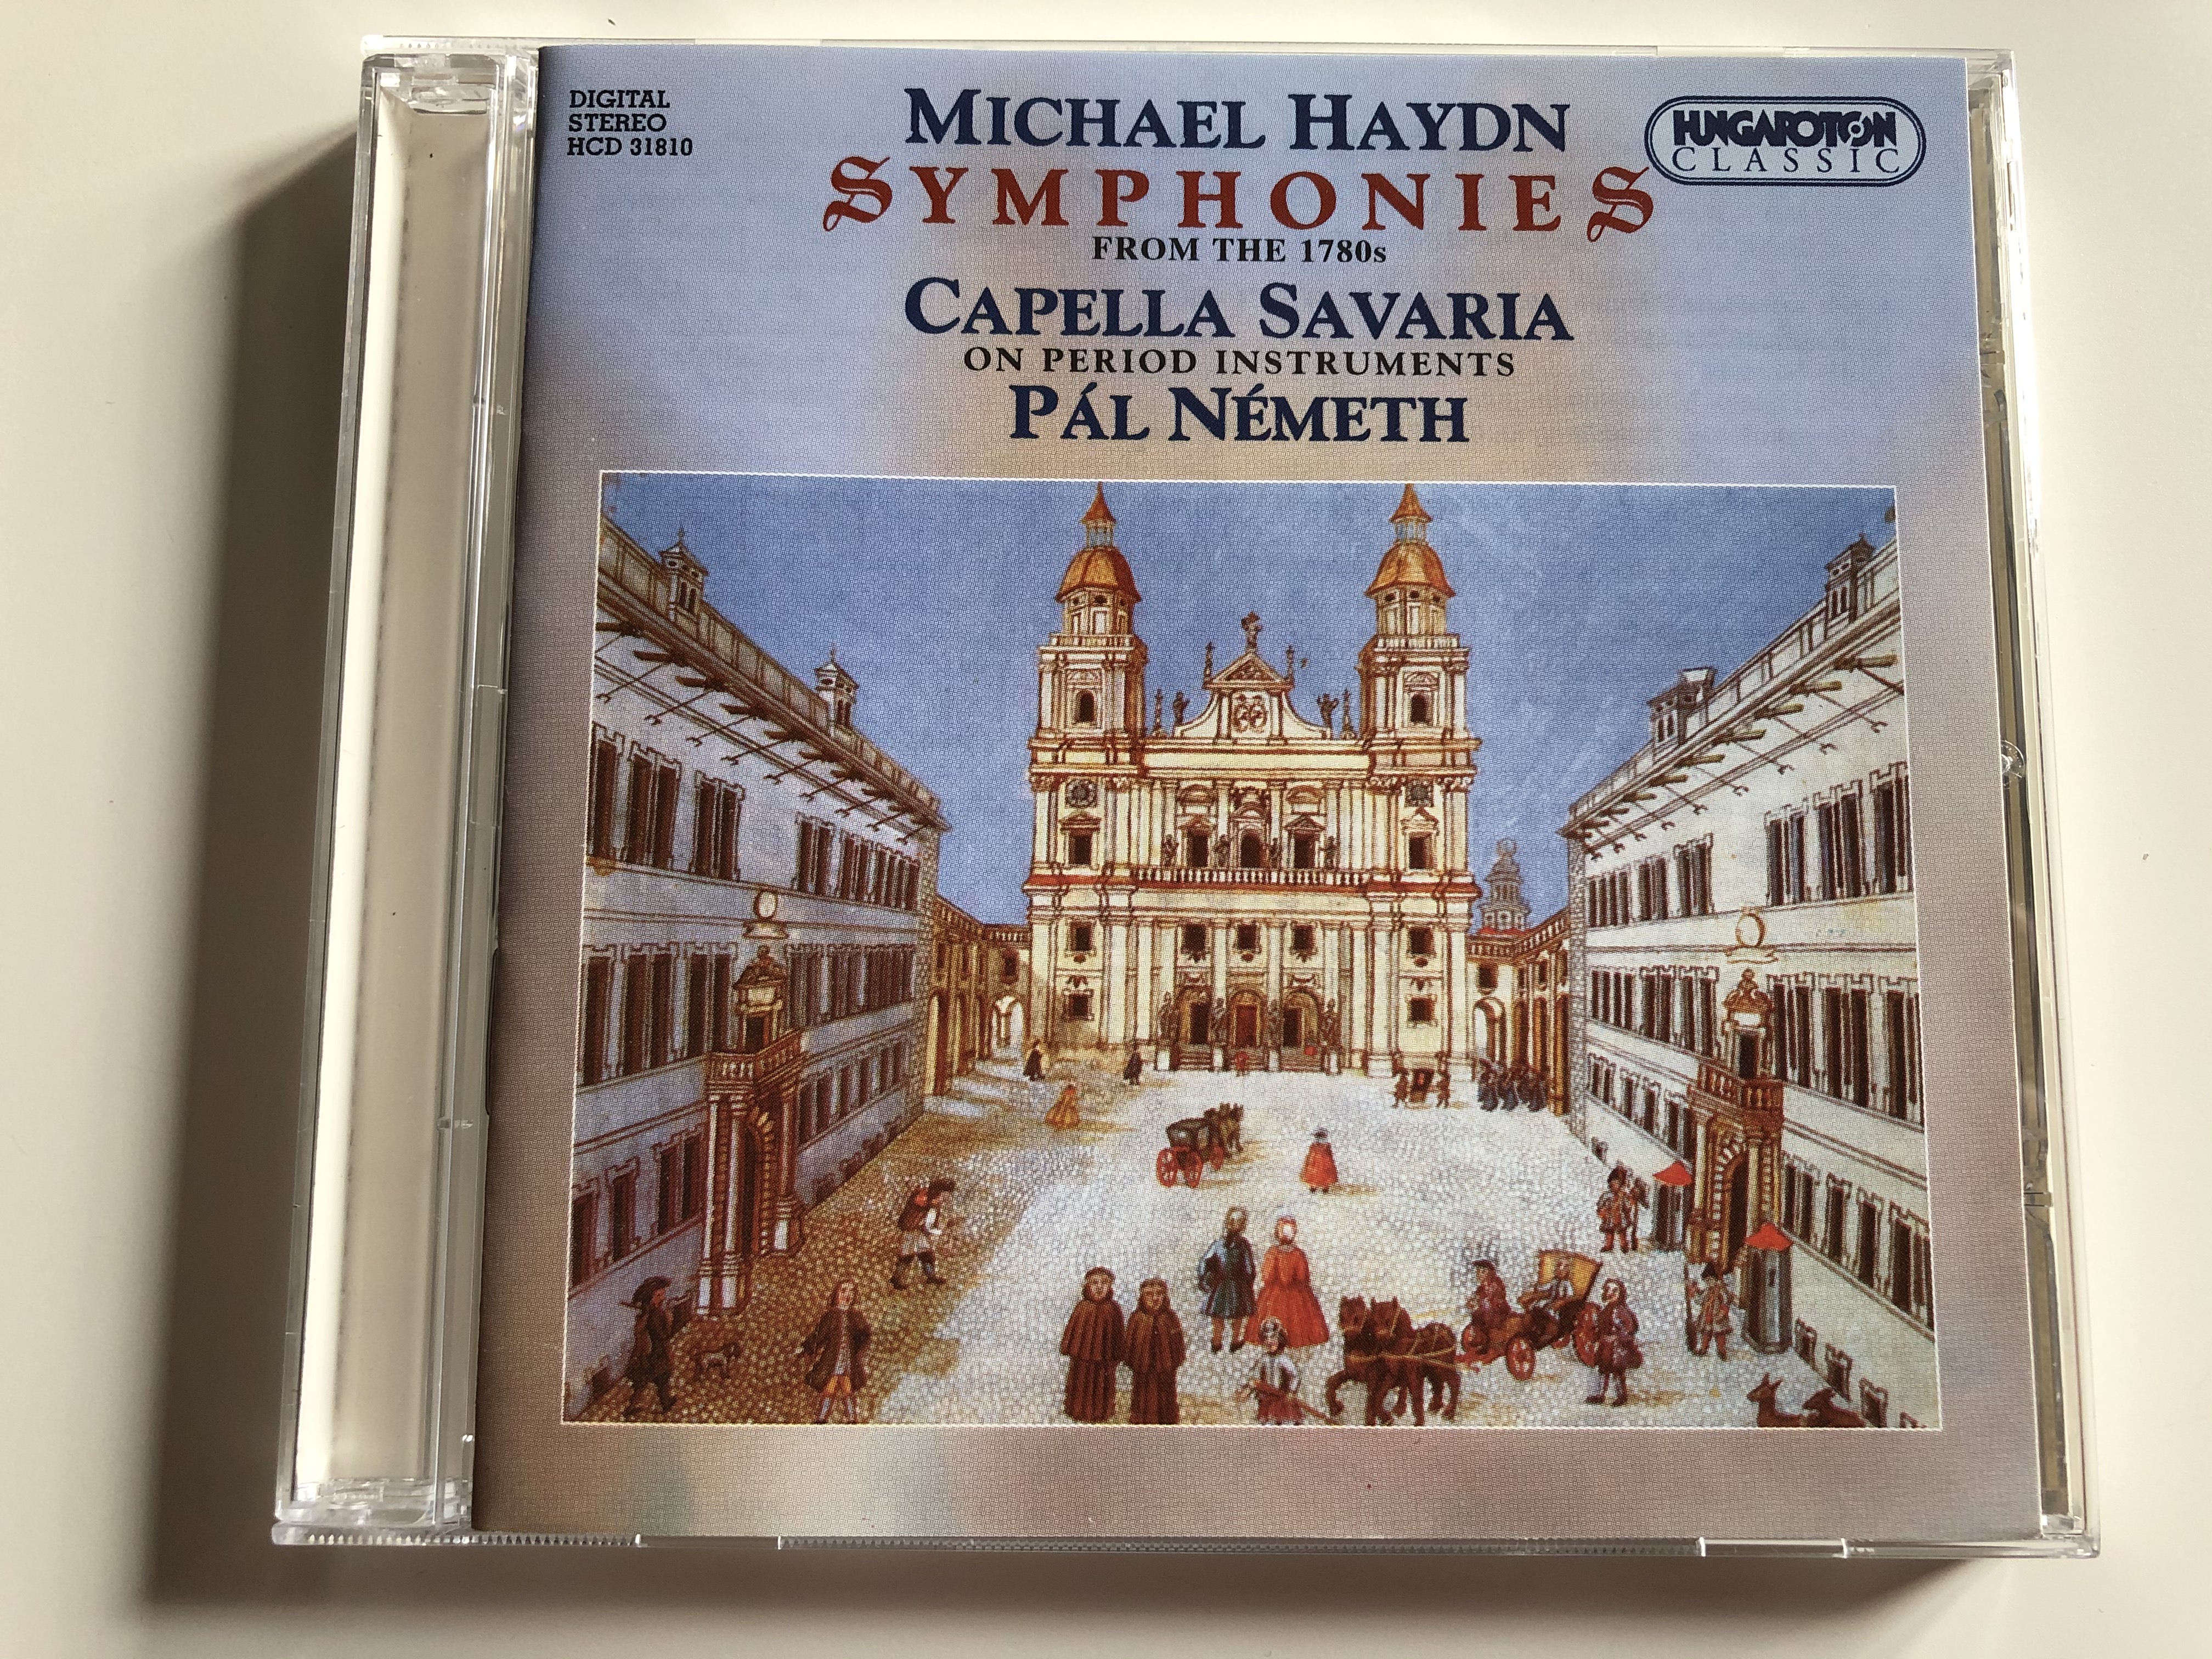 michael-haydn-symphonies-from-the-1780s-capella-savaria-on-period-instruments-pal-nemeth-hungaroton-classic-audio-cd-1999-stereo-hcd-31810-1-.jpg